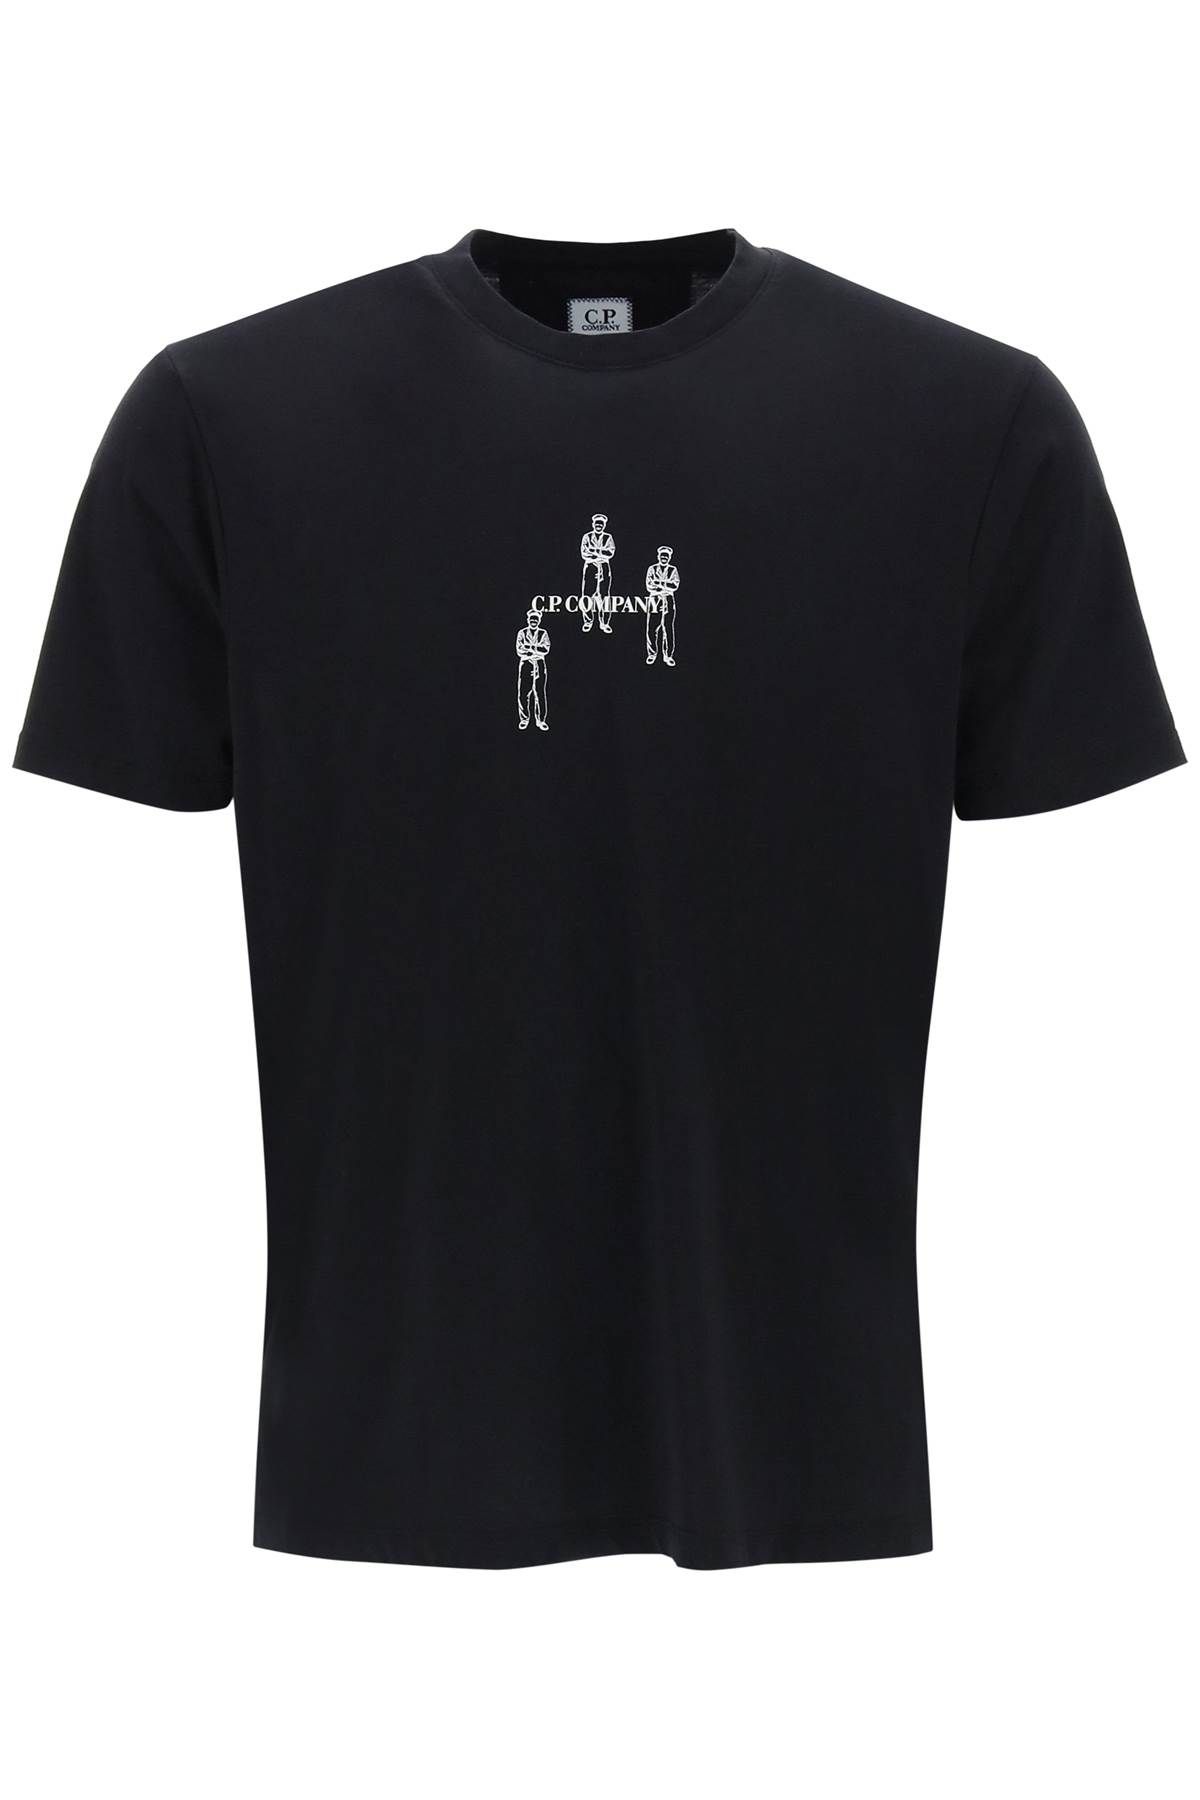 C.p. Company Bristish Sailot T-shirt In Black